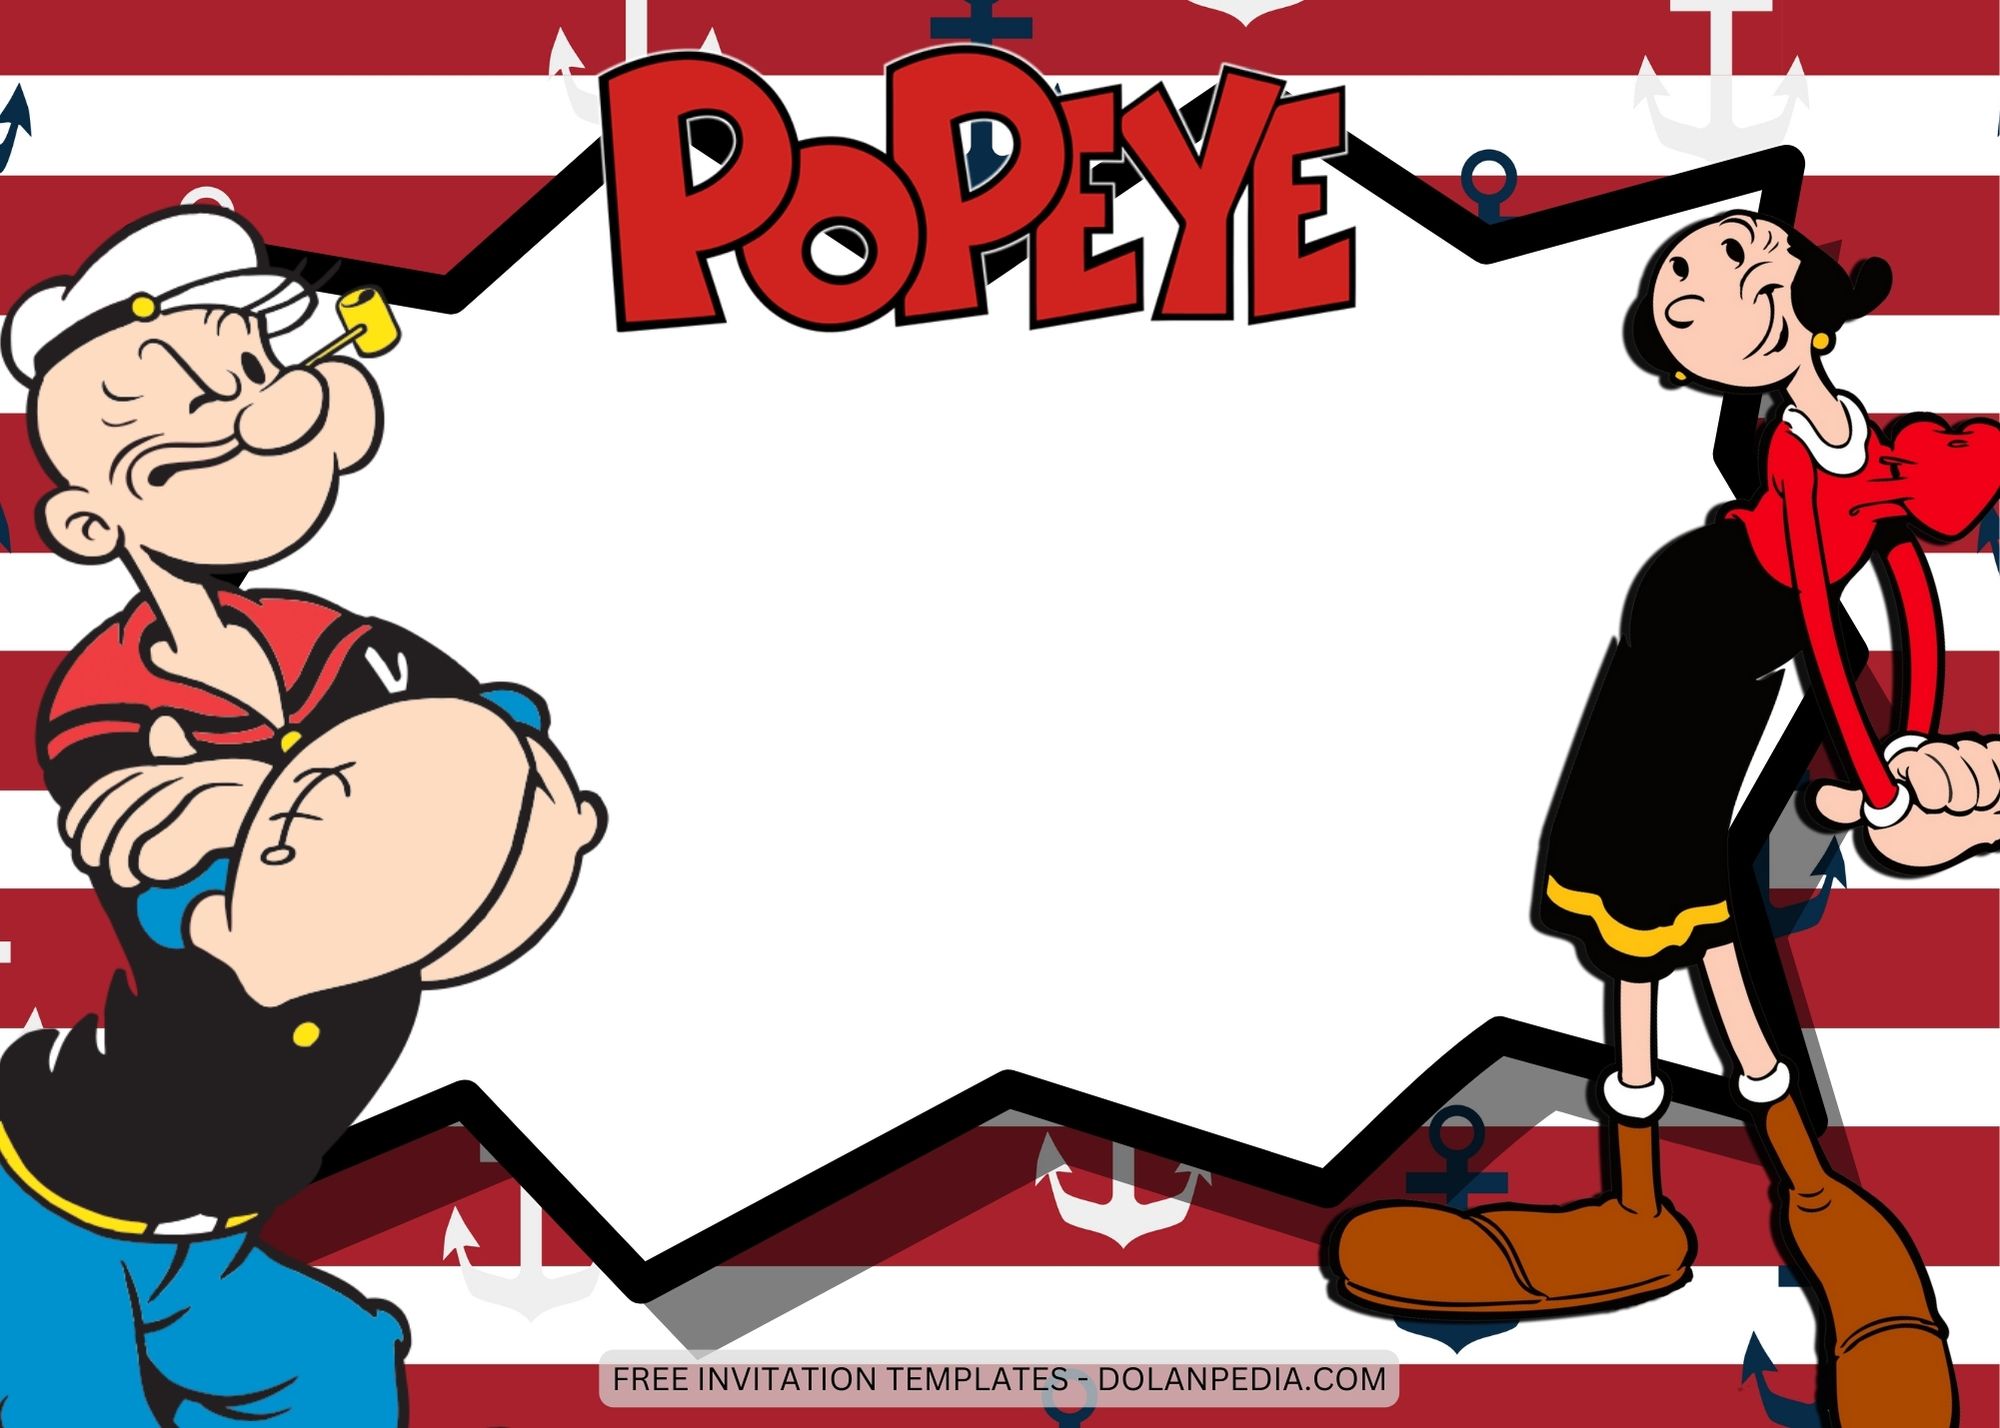 Blank Popeye The Sailor Man Birthday Invitation Templates Two